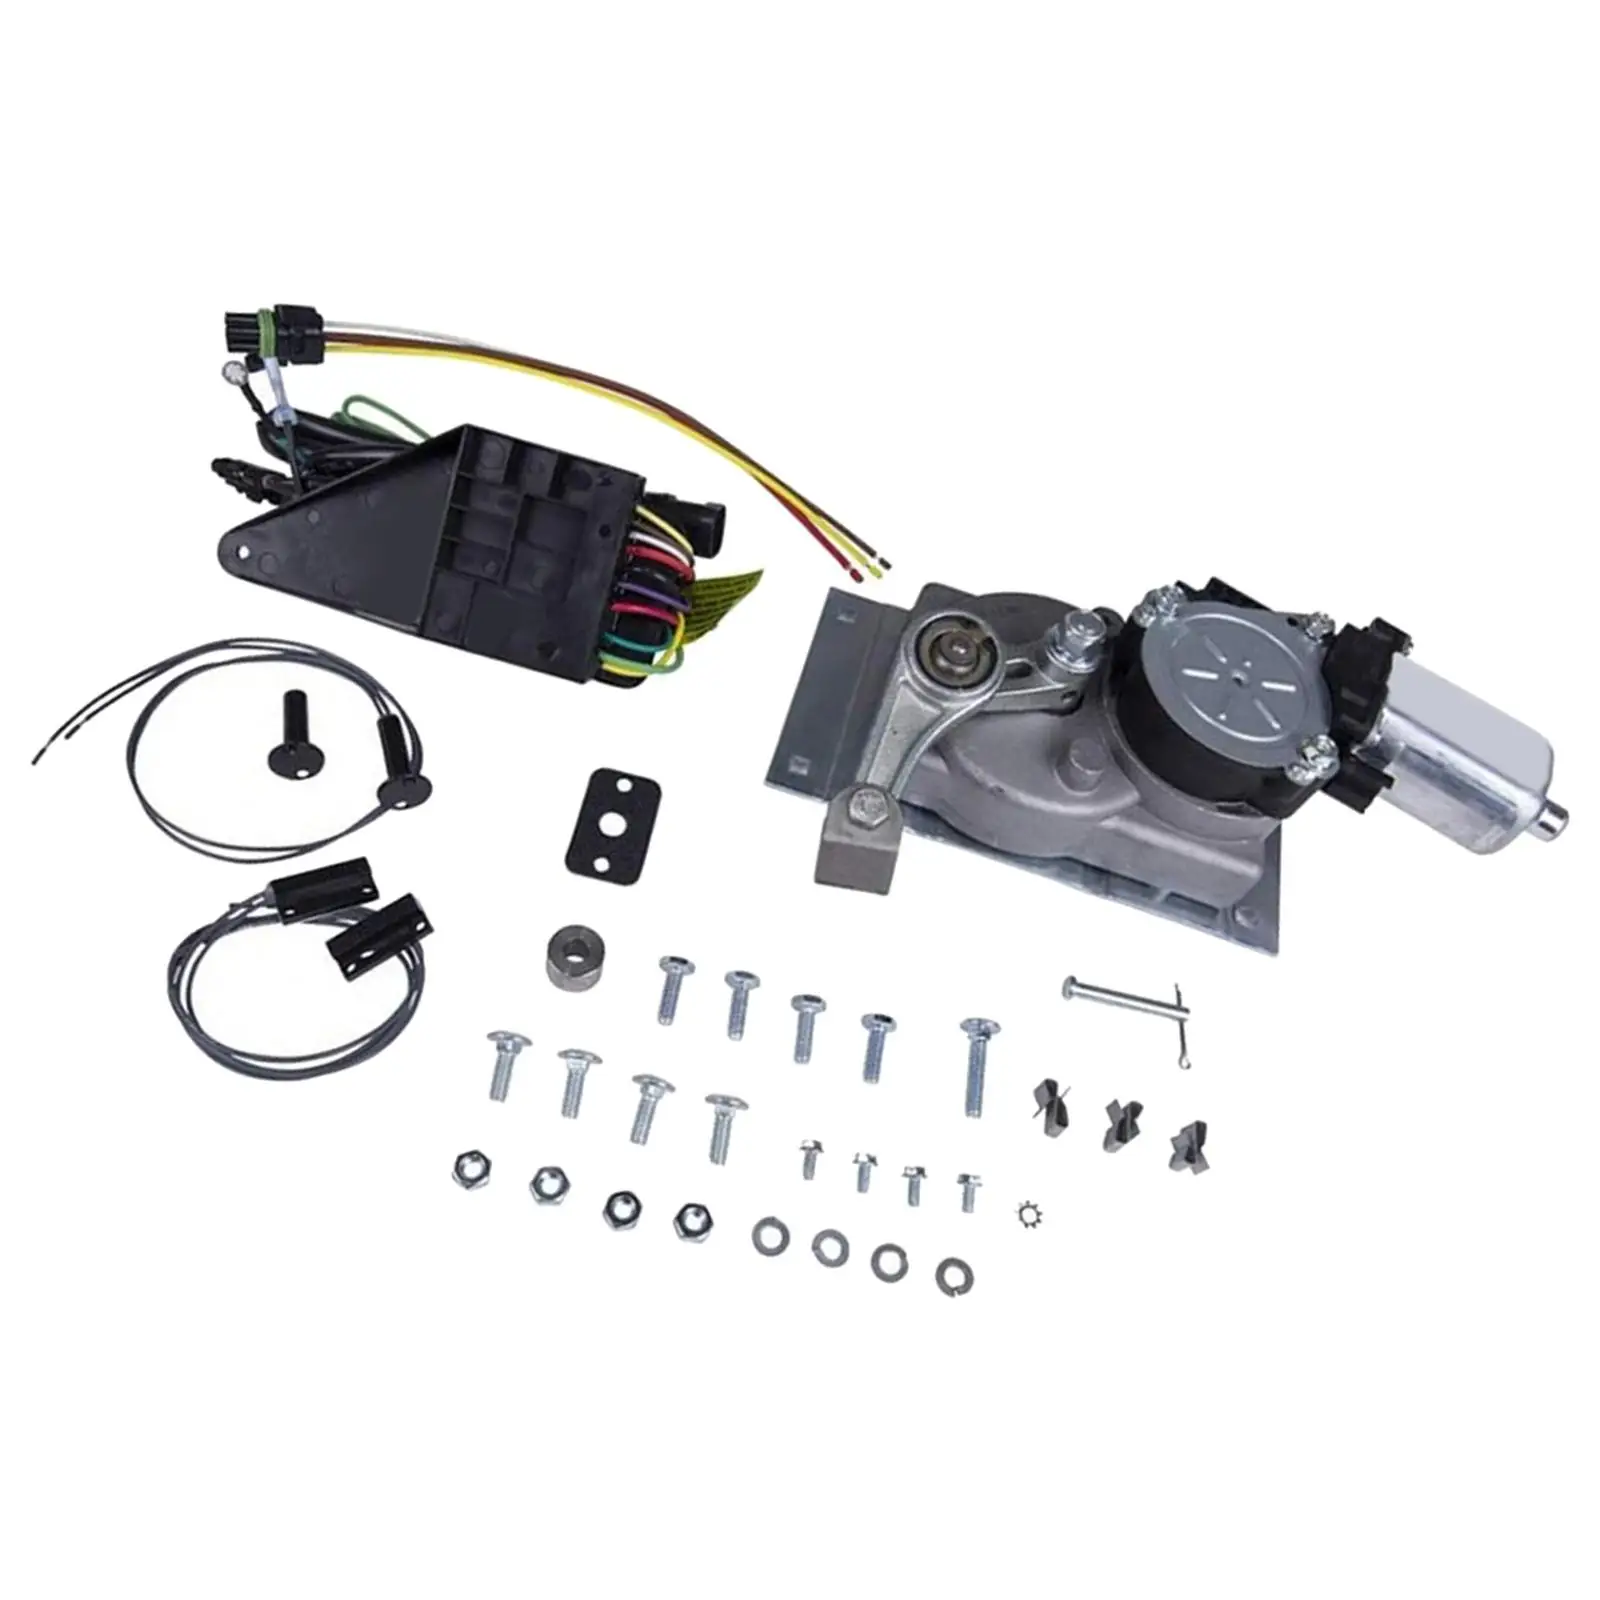 RV Trailer Step Motor Conversion Kit Motor Conversion Kit for Truck Travel Trailers Motorhomes B Linkage Easily Install